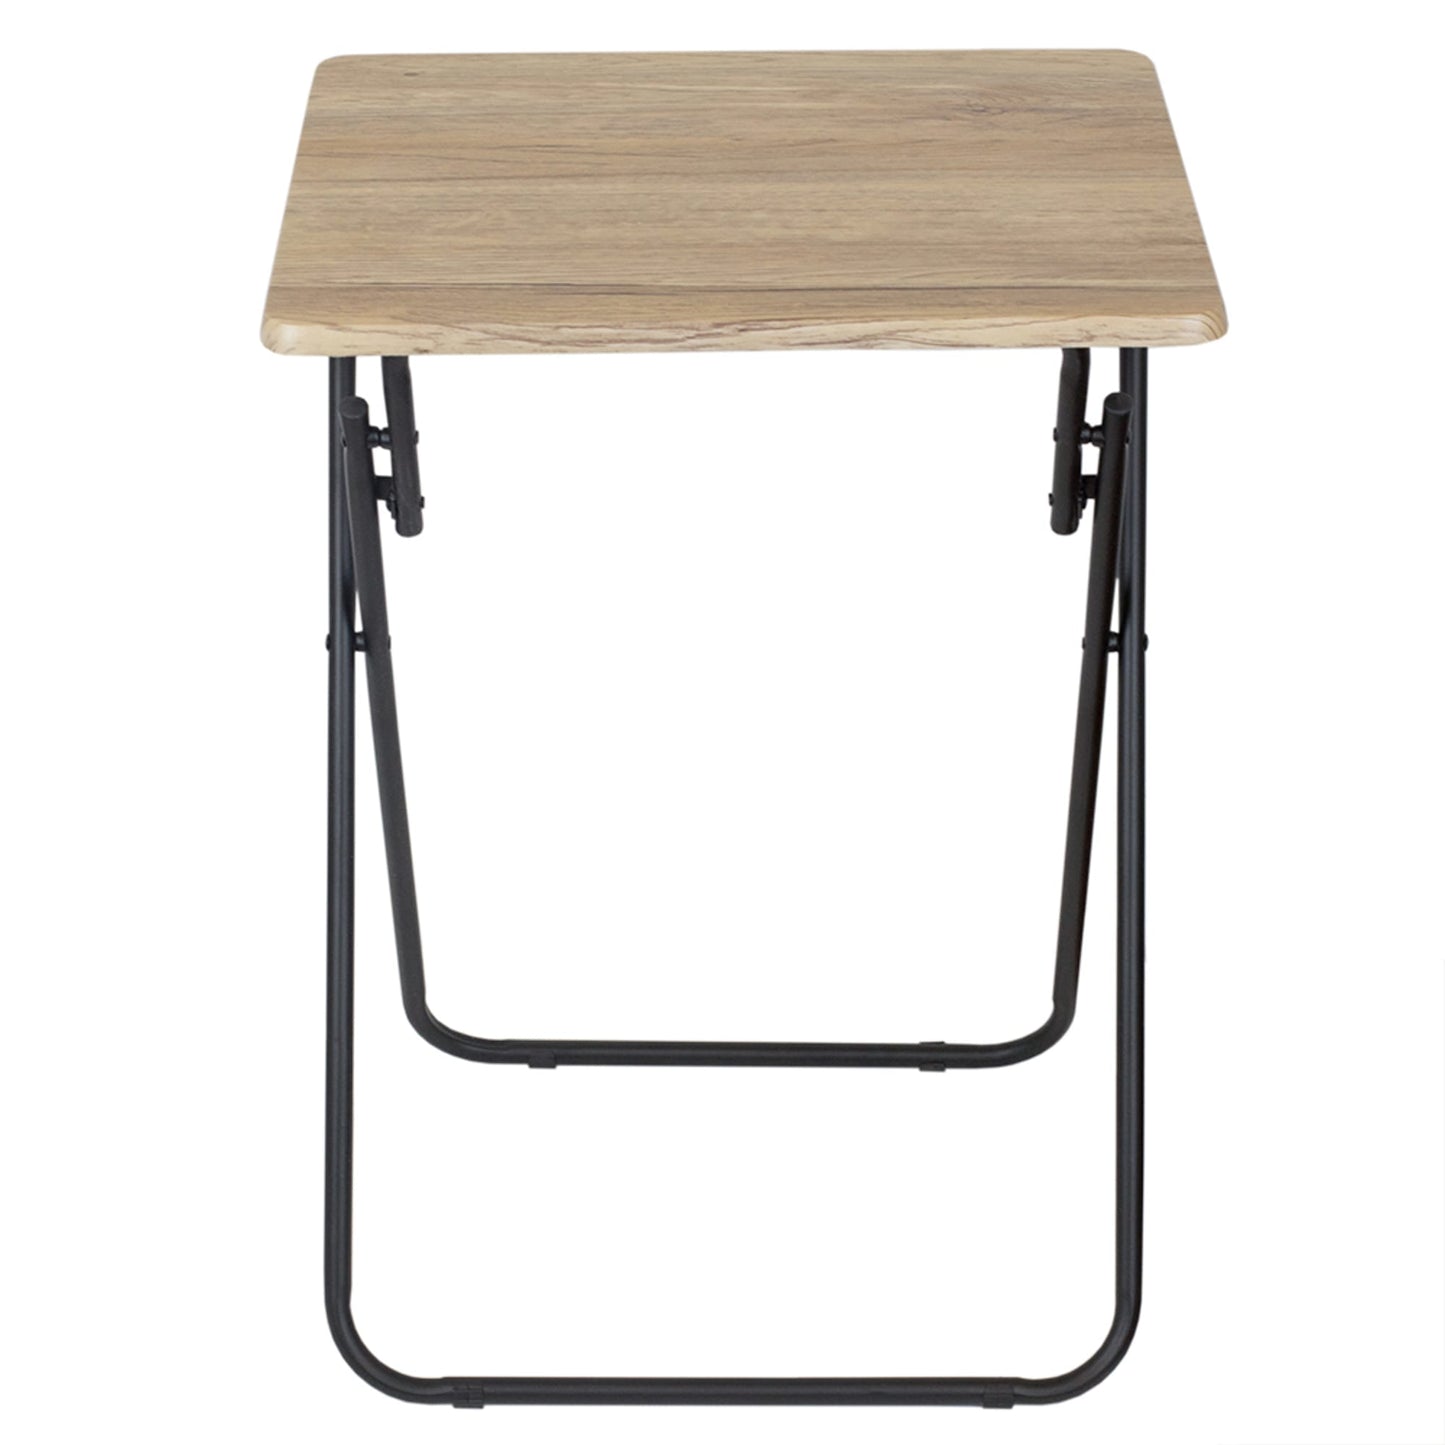 Multi-Purpose Foldable Table, Rustic